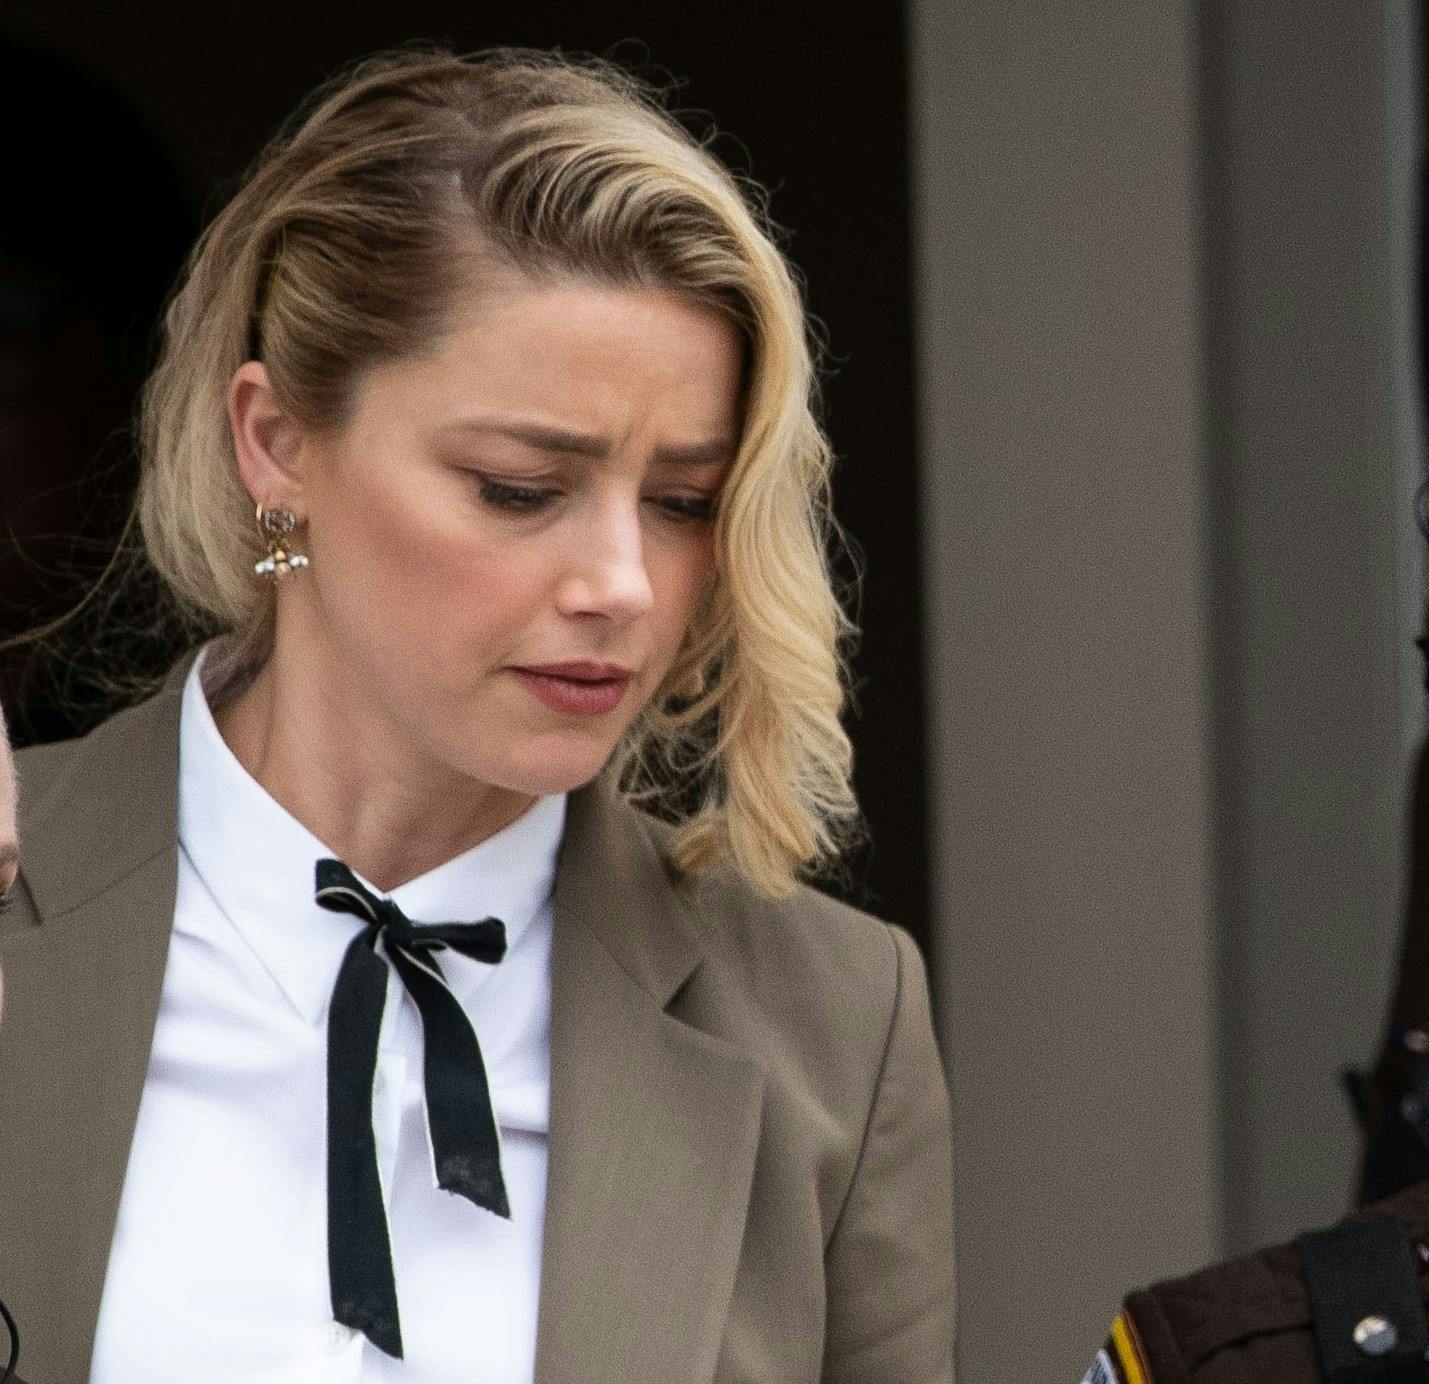 36-årige Amber Heard var mødt op i retten, hvor hun netop har tabt sagen&nbsp;